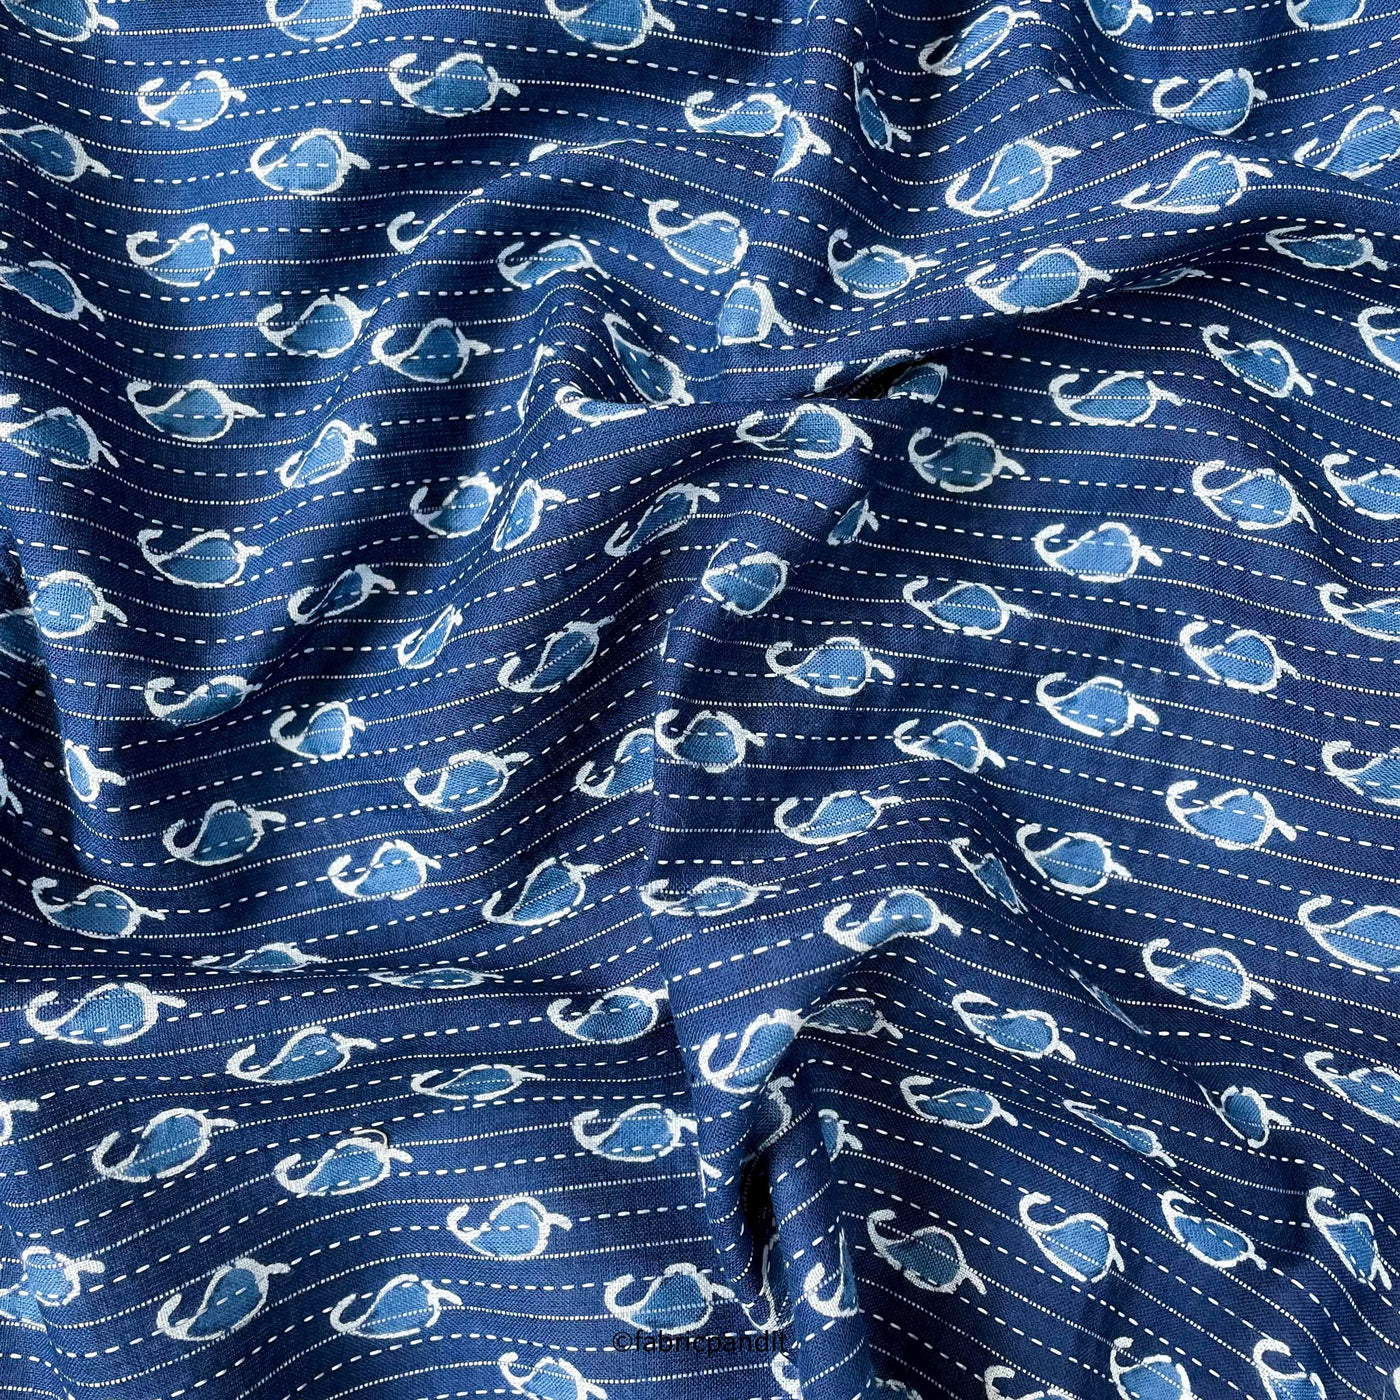 Hand Block Printed Cotton Fabric Cut Piece (CUT PIECE) Indigo Dabu Natural Dyed Blue Paisleys Woven Kantha Hand Block Printed Pure Cotton Fabric (Width 42 inches)